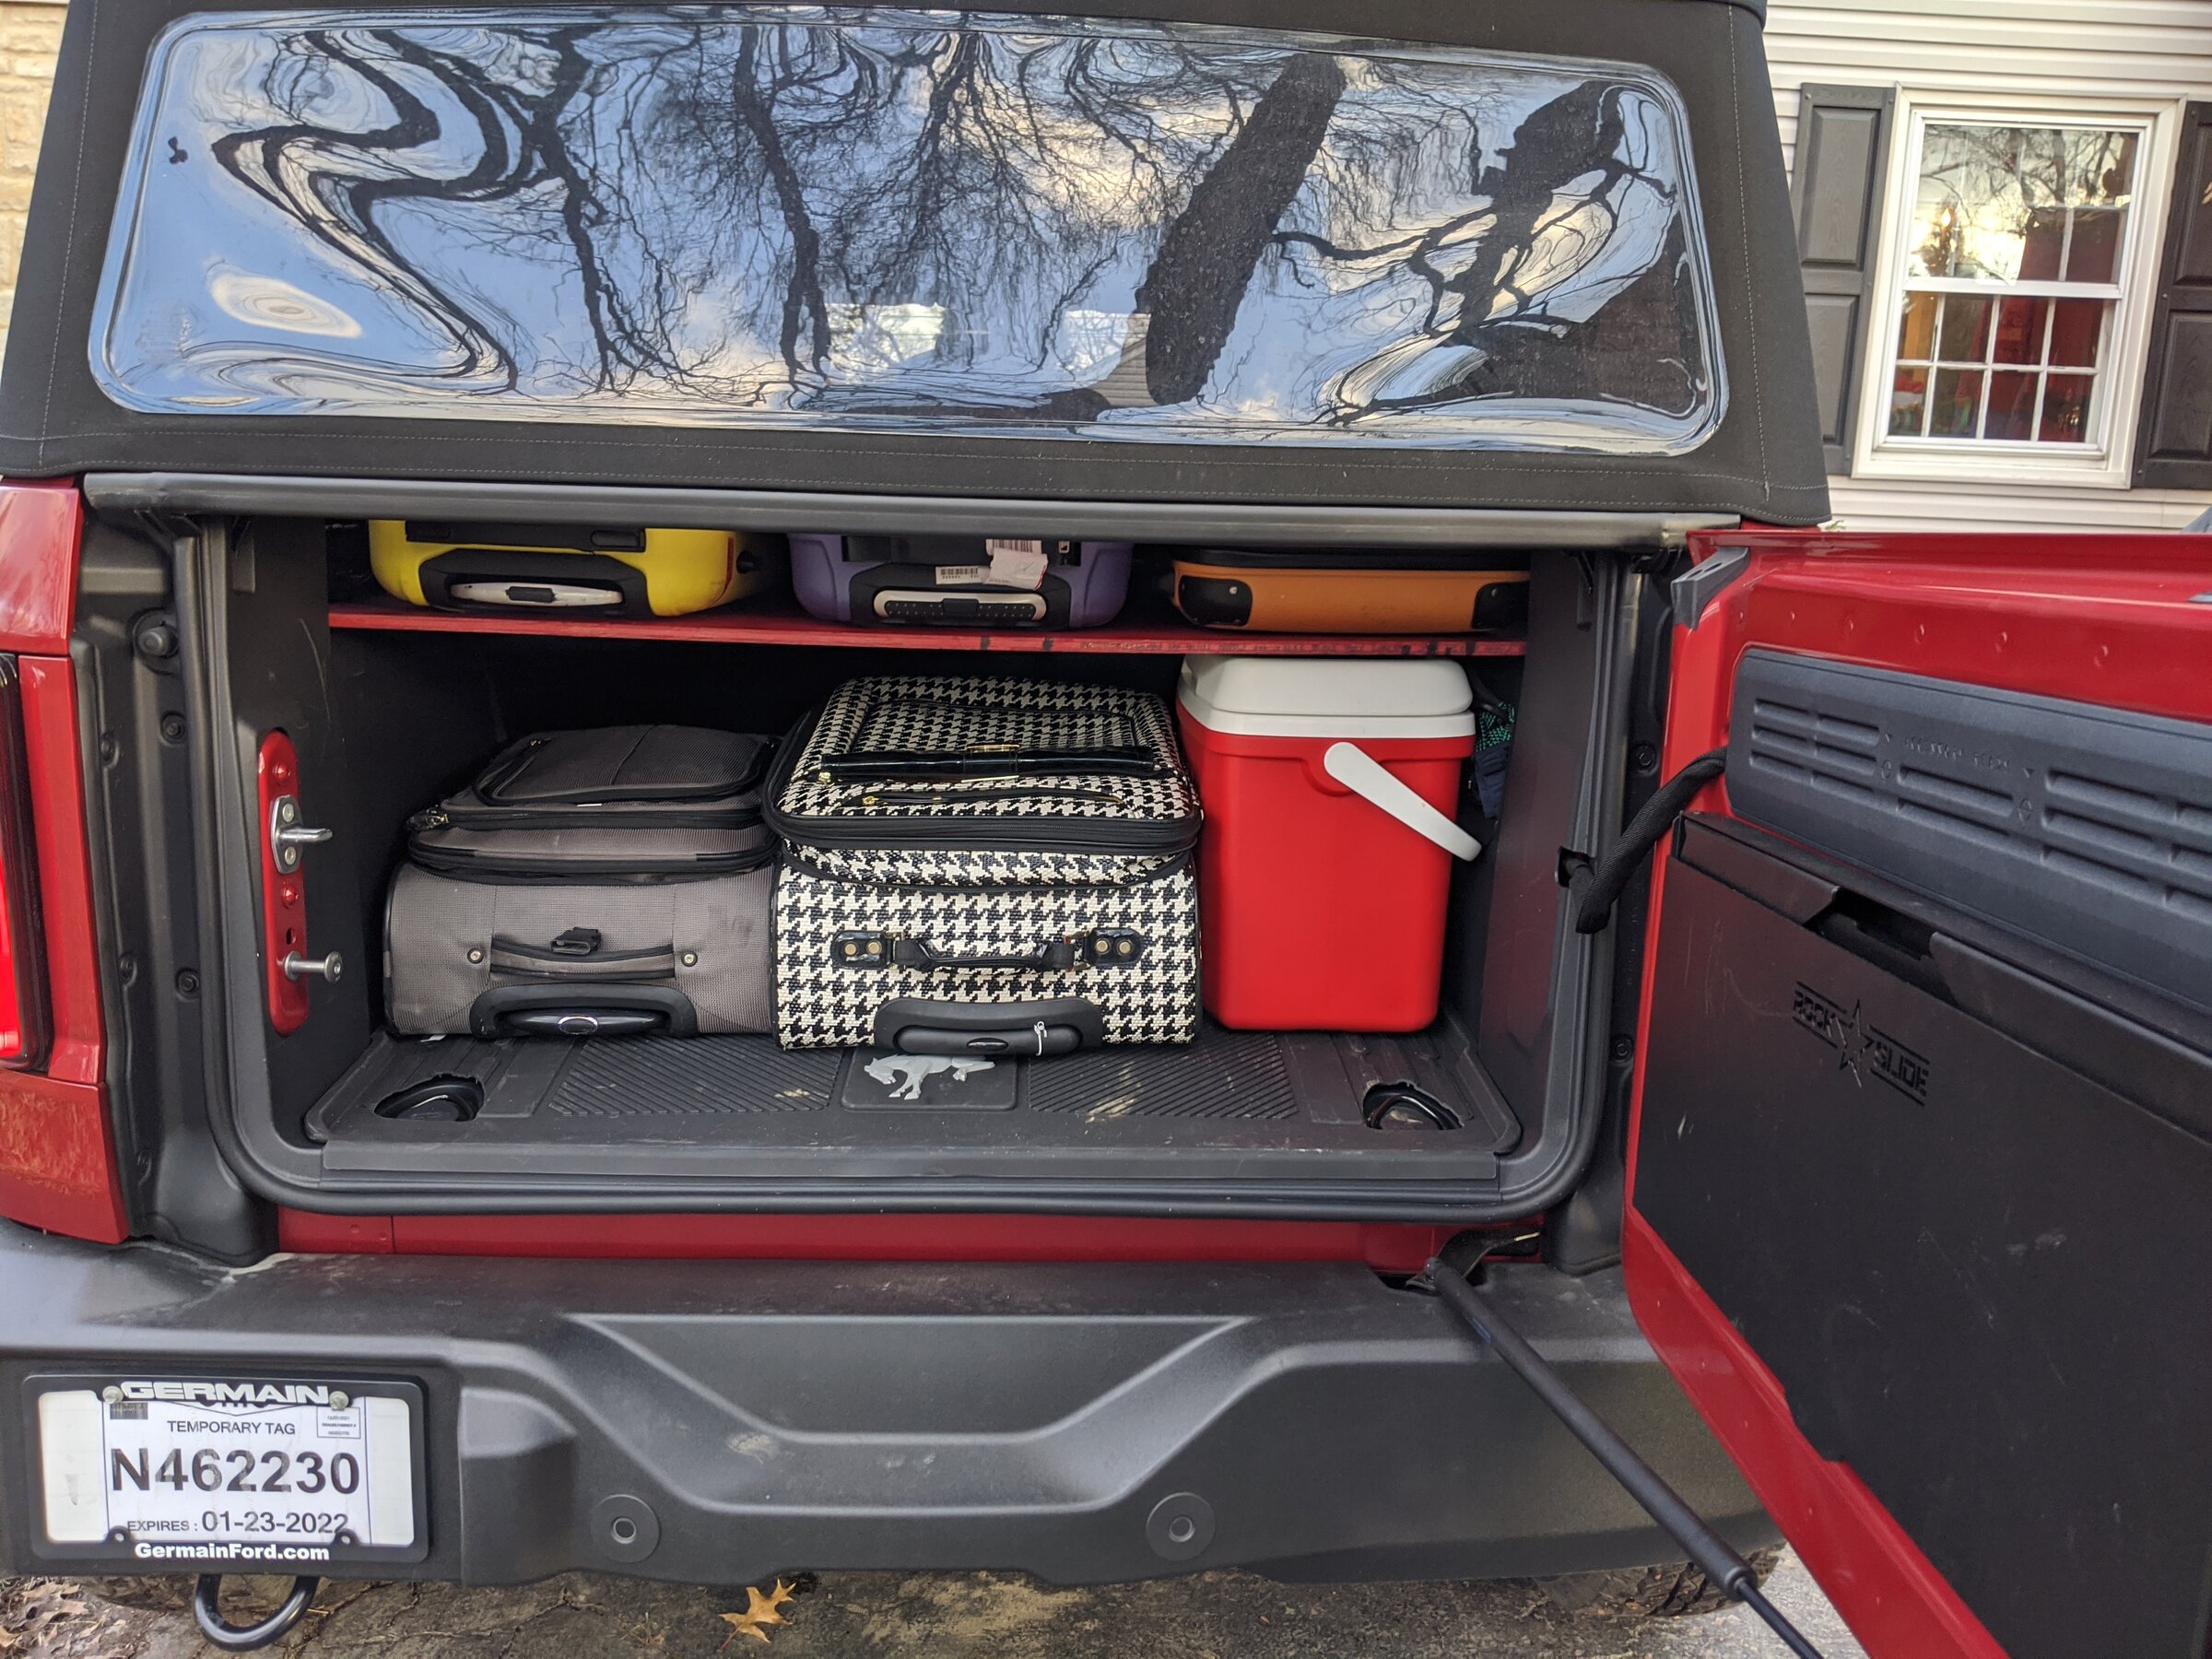 Ford Bronco [DIY] $28 trunk storage shelf for 4 door Broncos. No cutting required. 440F1C18-6F9E-41C5-9F5C-EE0613348DB7